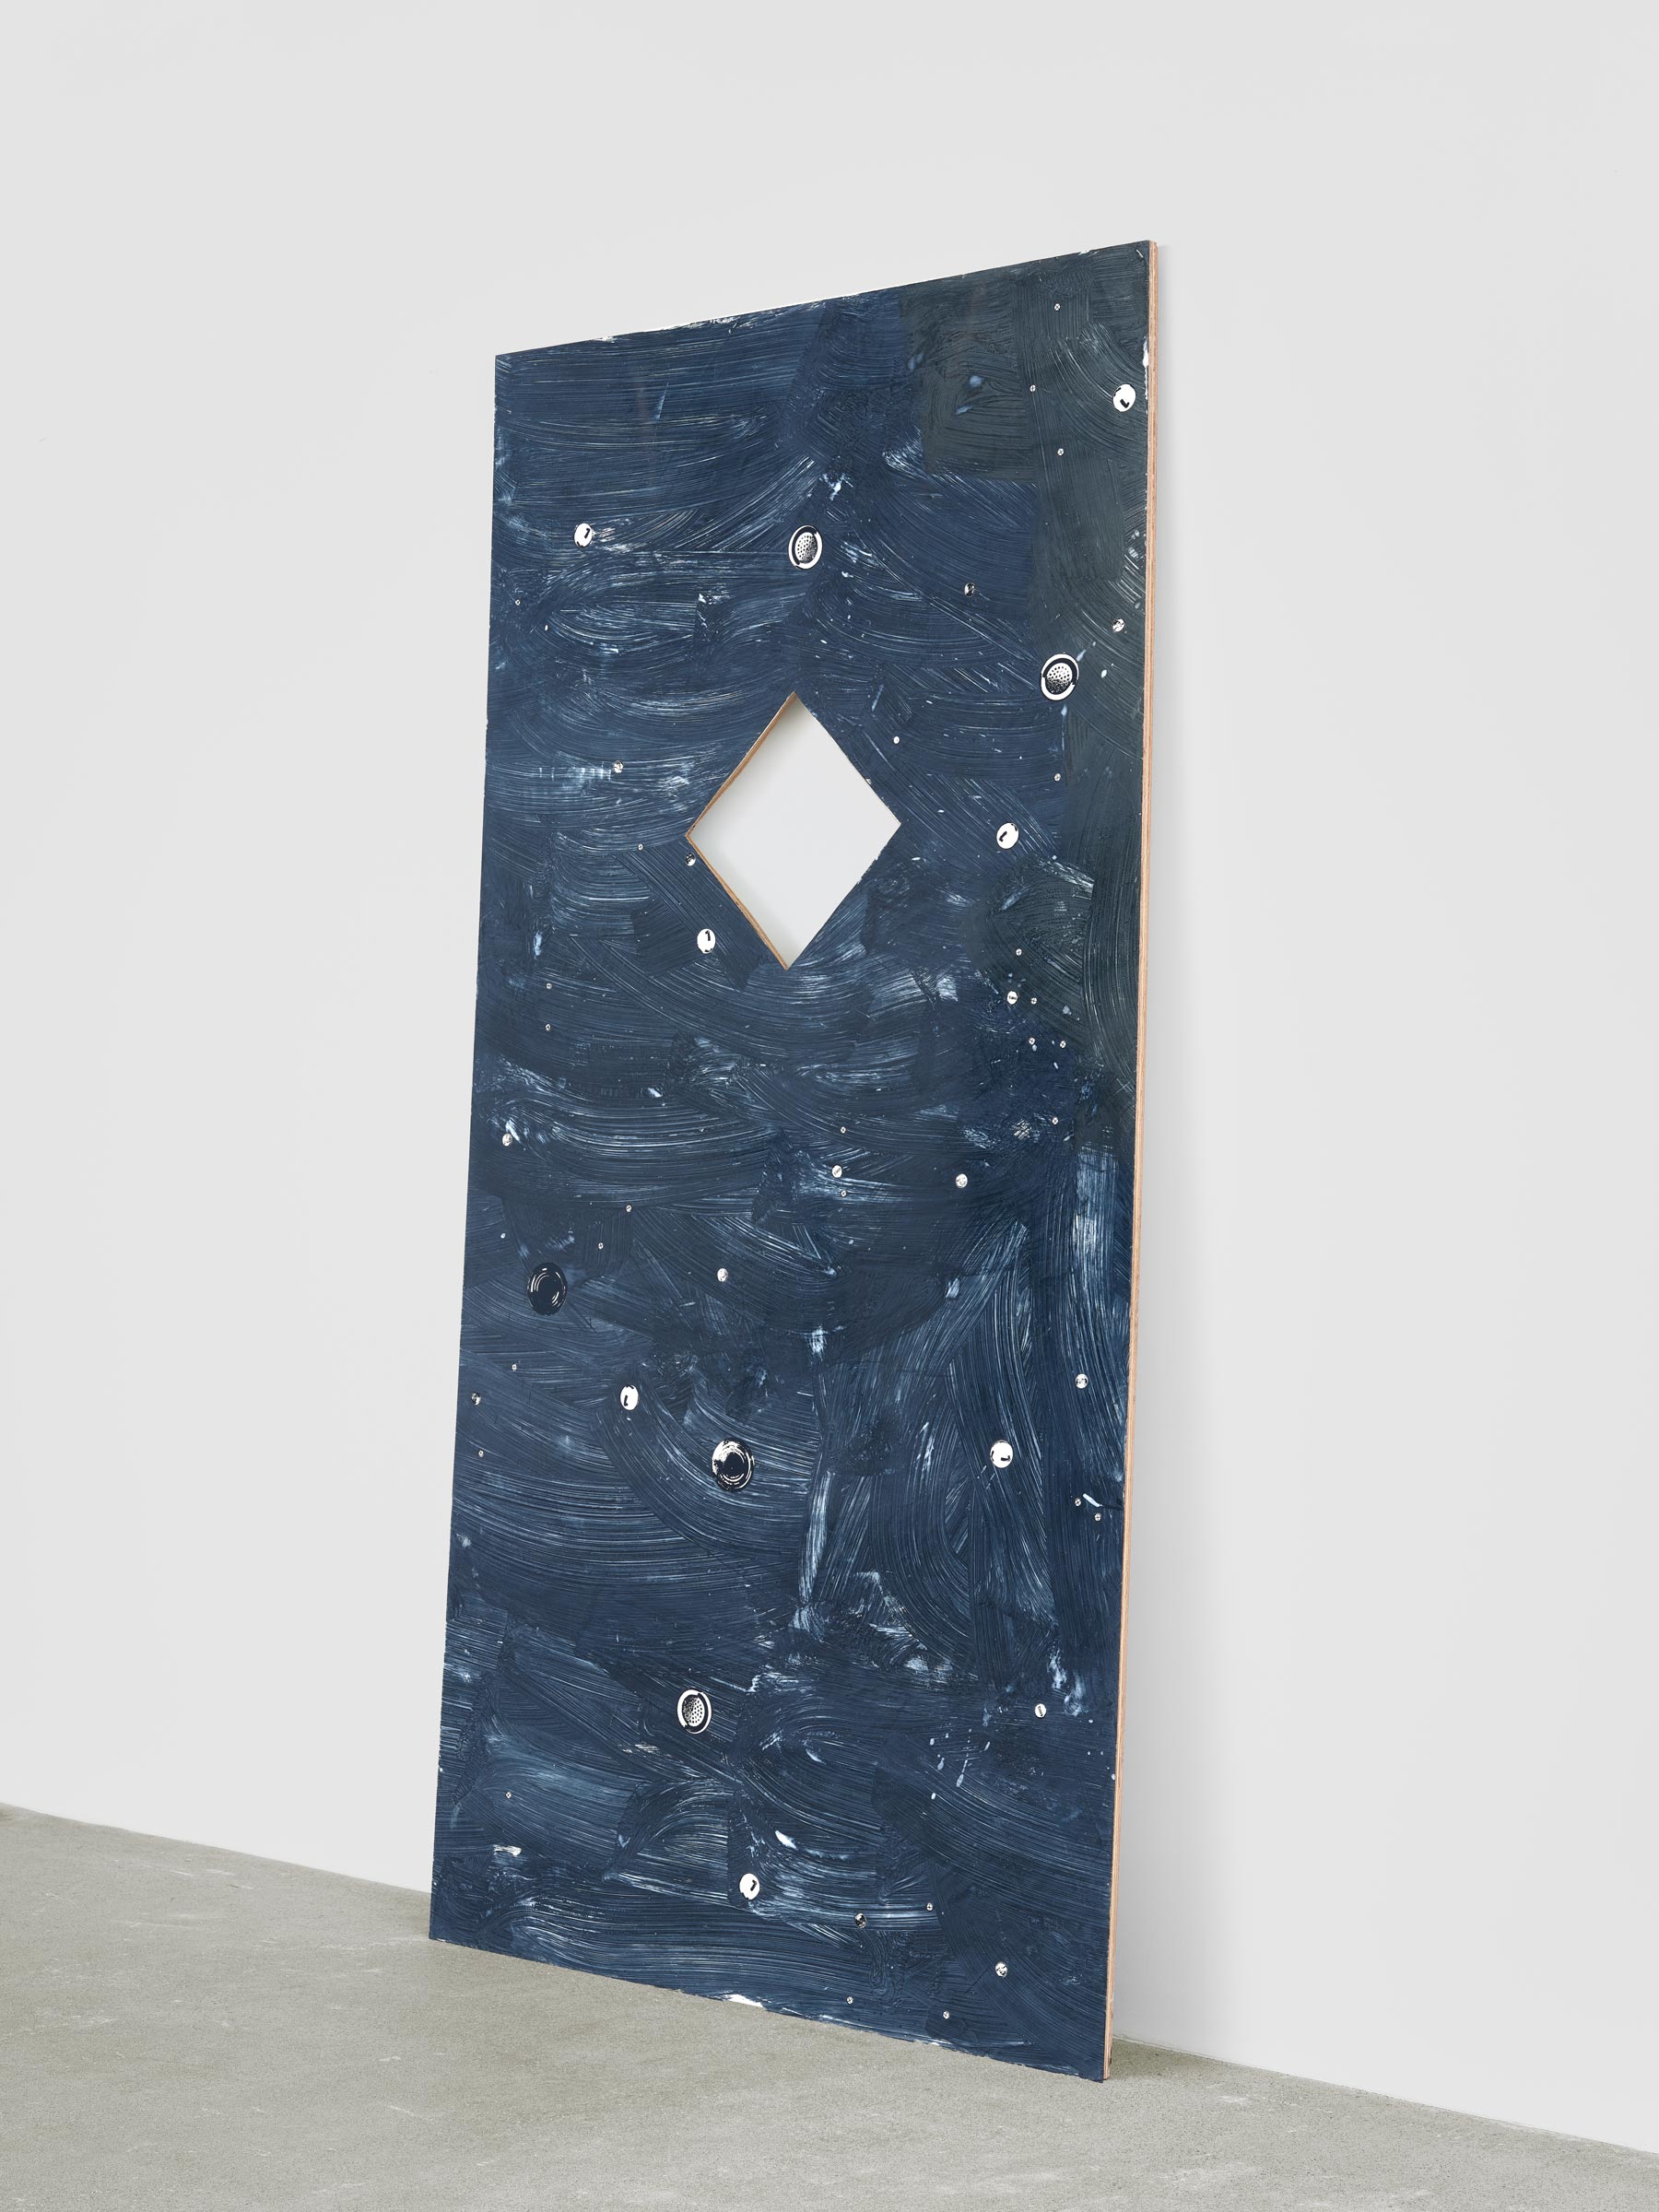 Alex Kwartler, Night Sky II, 2022, Venetian plaster and enamel on plywood, 96 x 48 in.